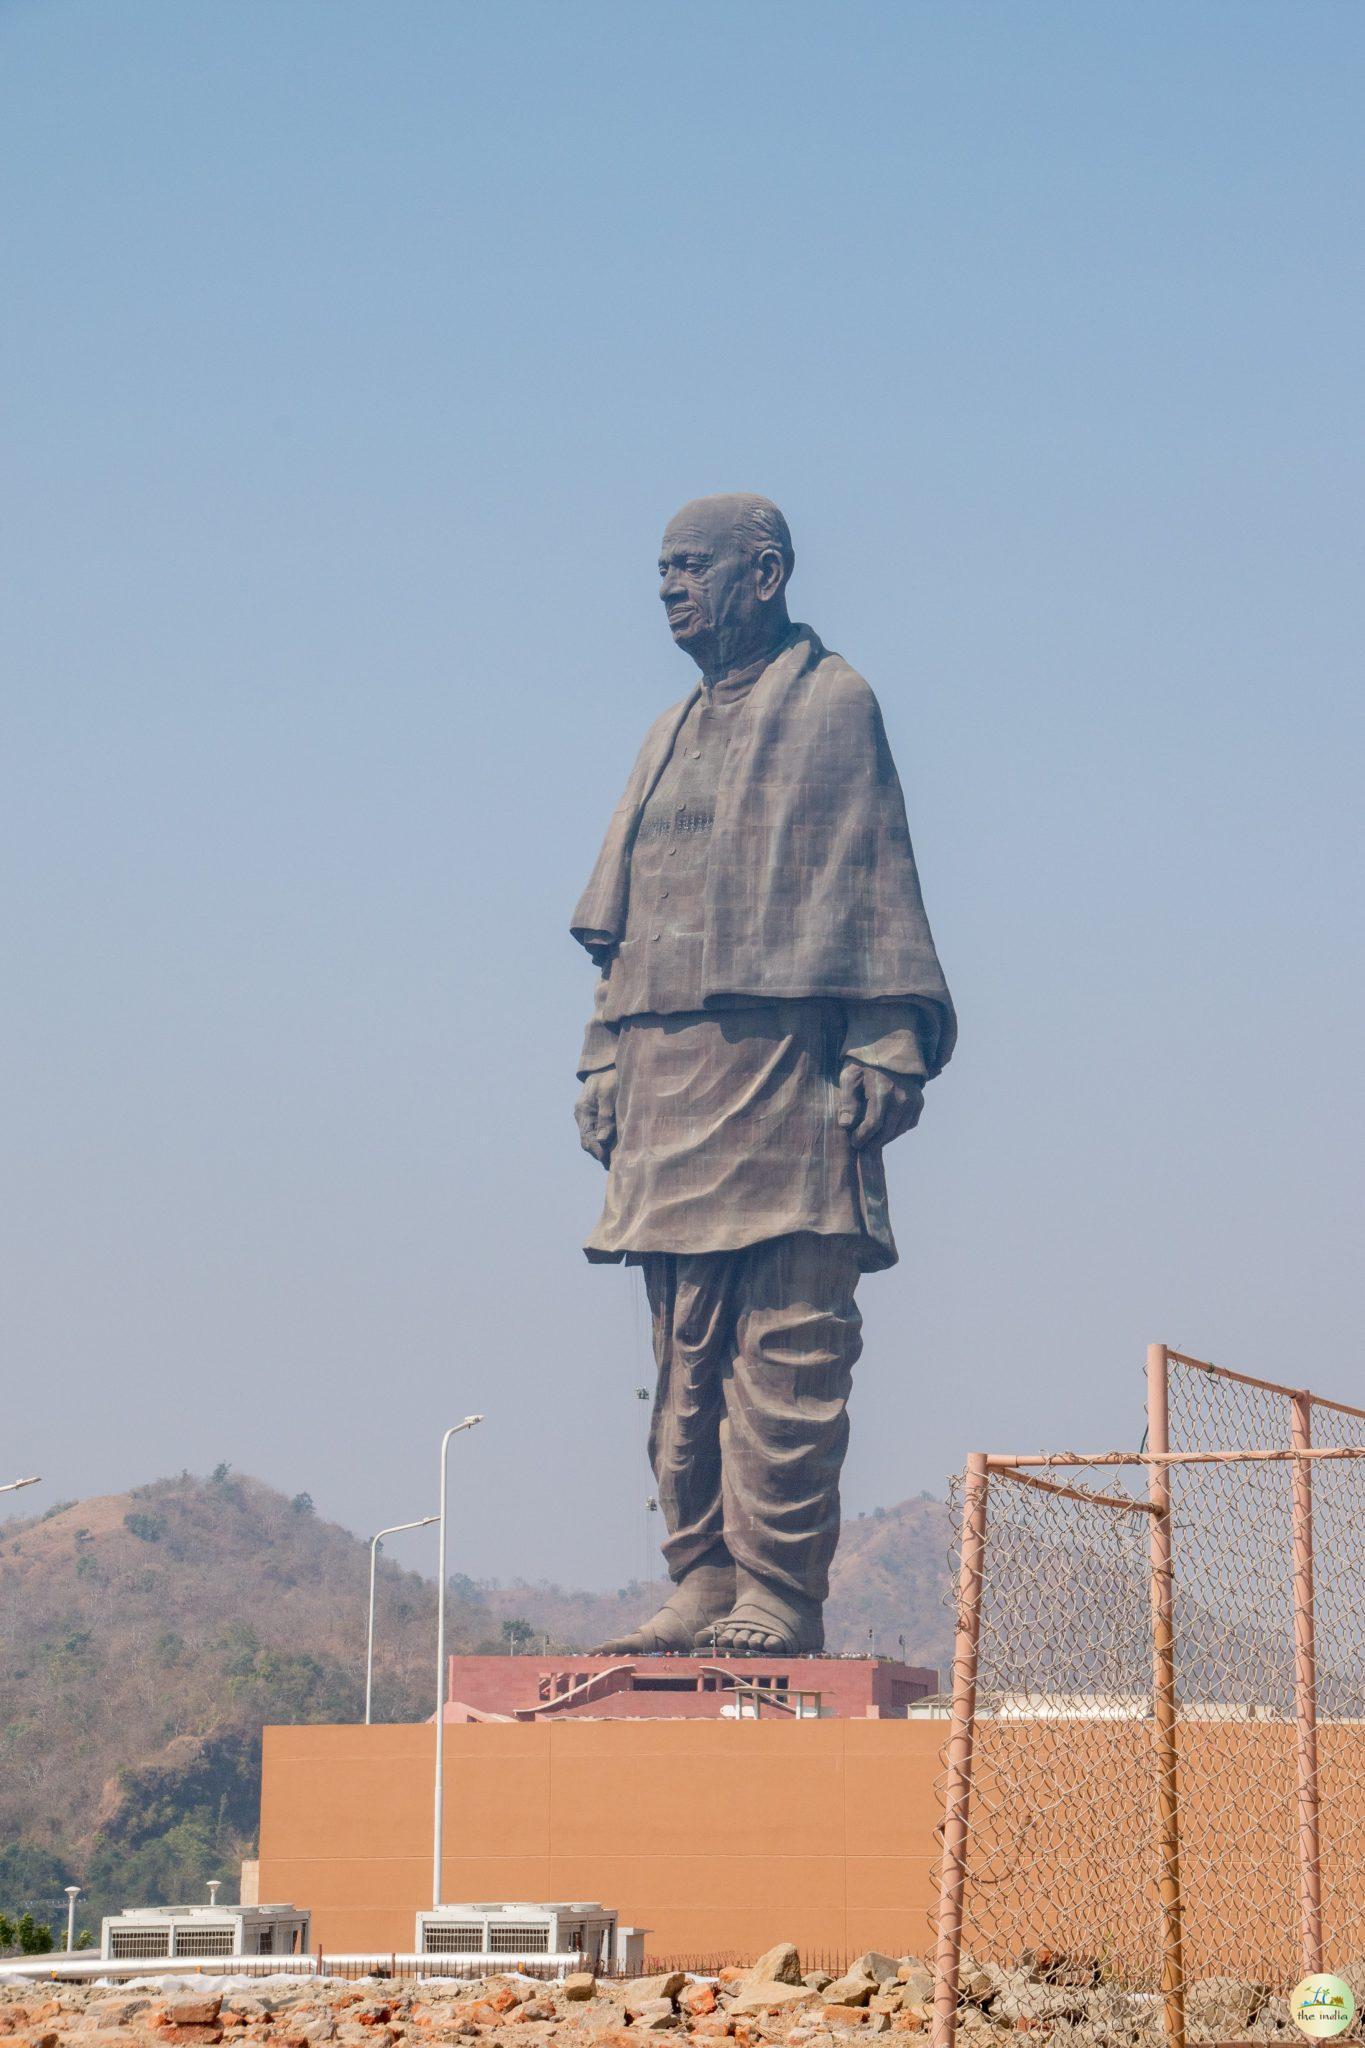 Statue of Unity (Sardar Patel Statue) Statue of Unity